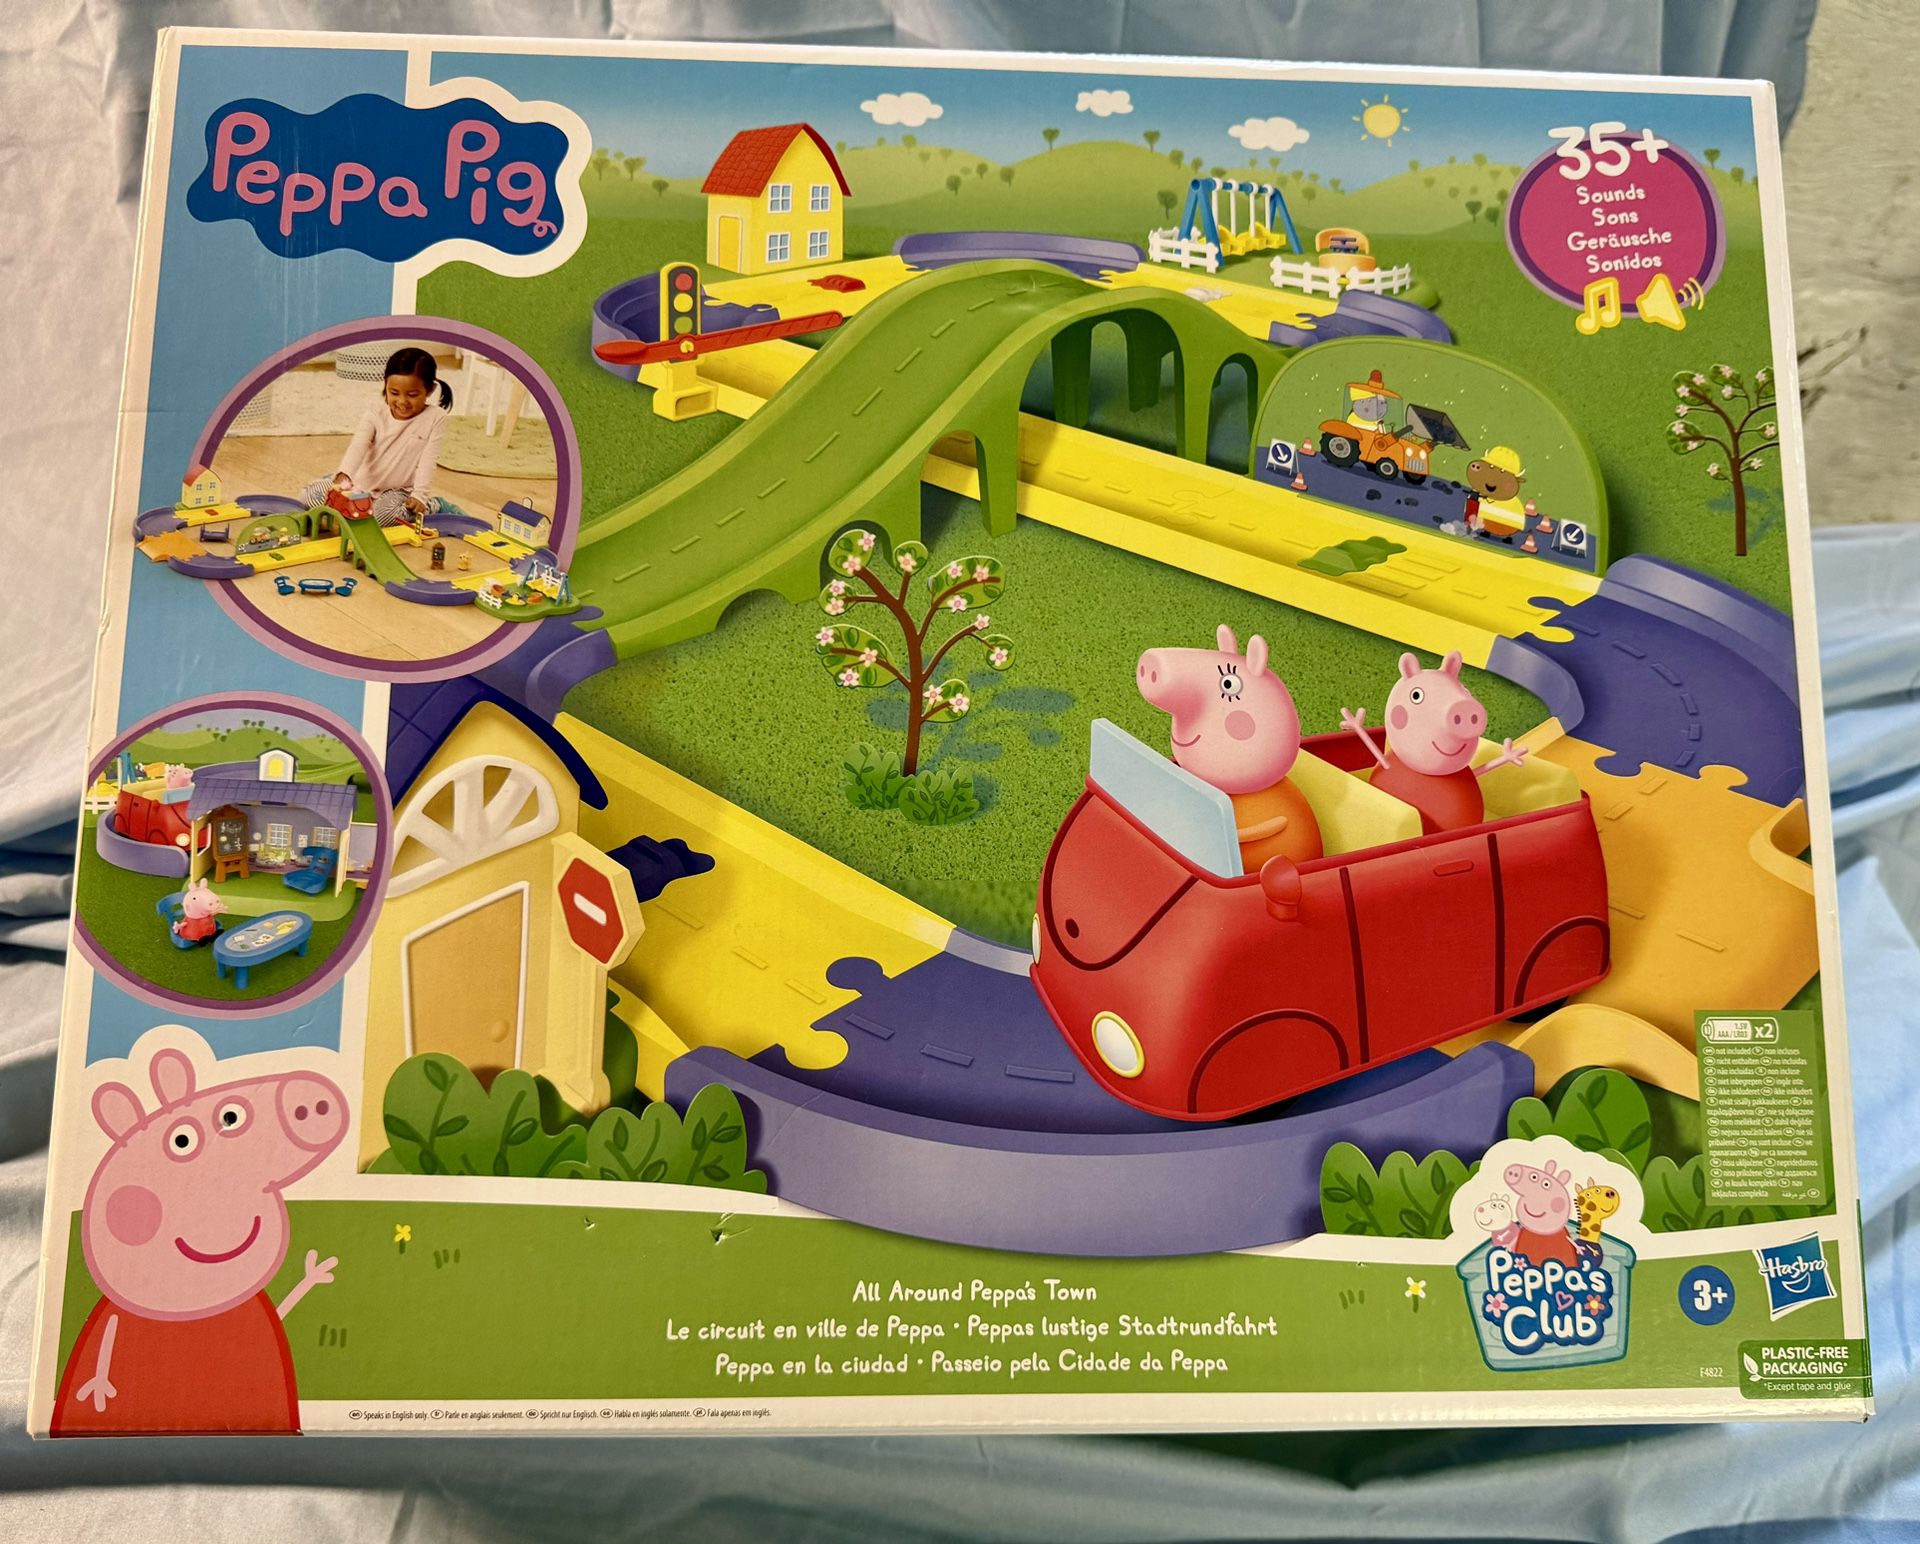 Peppa Pig All Around Peppa’s Town 30+ Piece Play Set